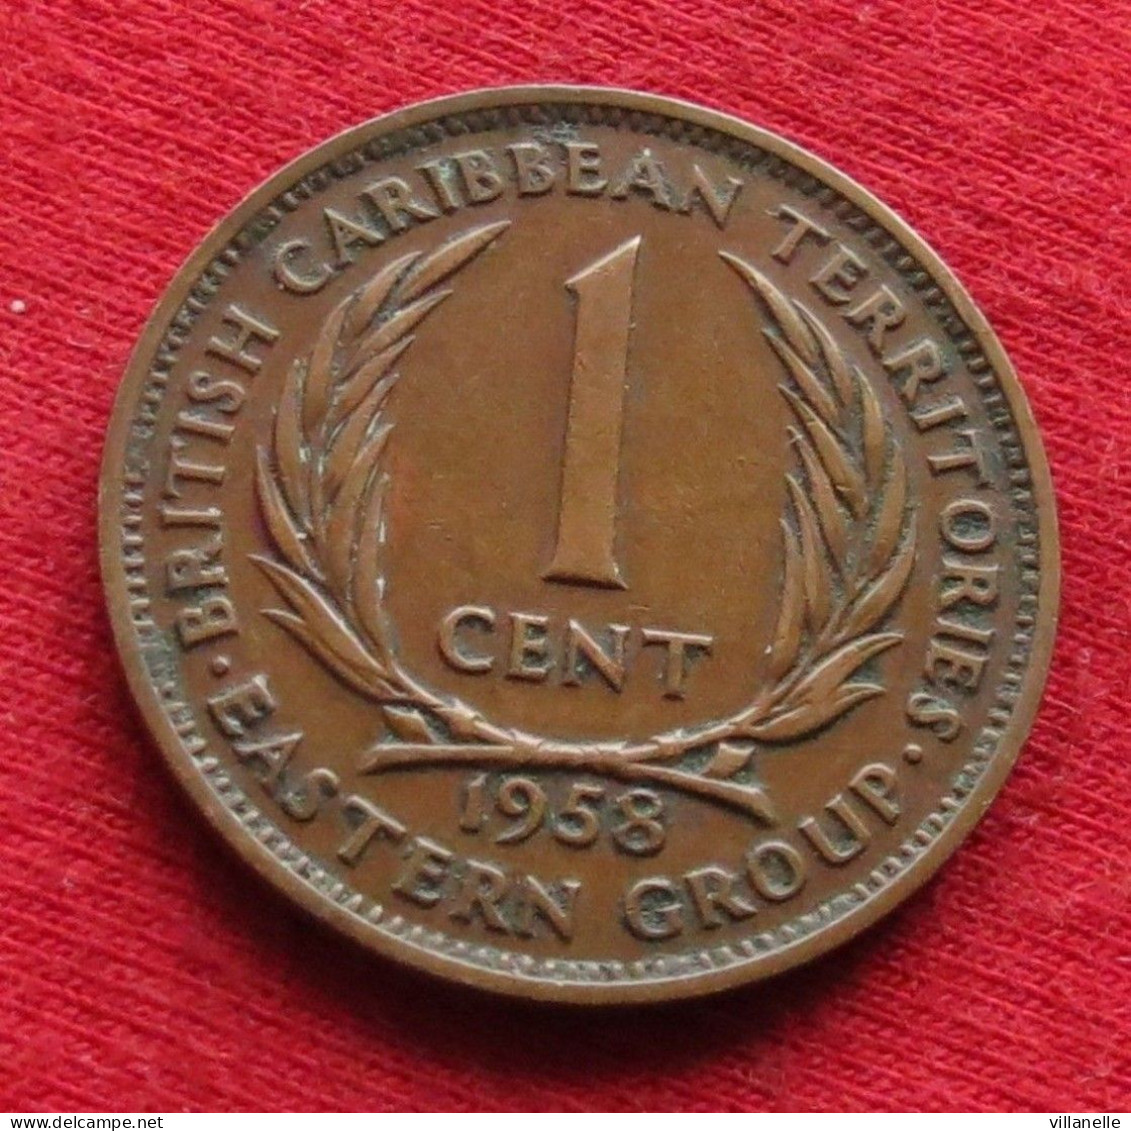 East Caribbean States 1 Cent 1958 KM# 2 *VT British Caribbean Territories Caraibas Caraibes Orientales - Britse Caribische Gebieden